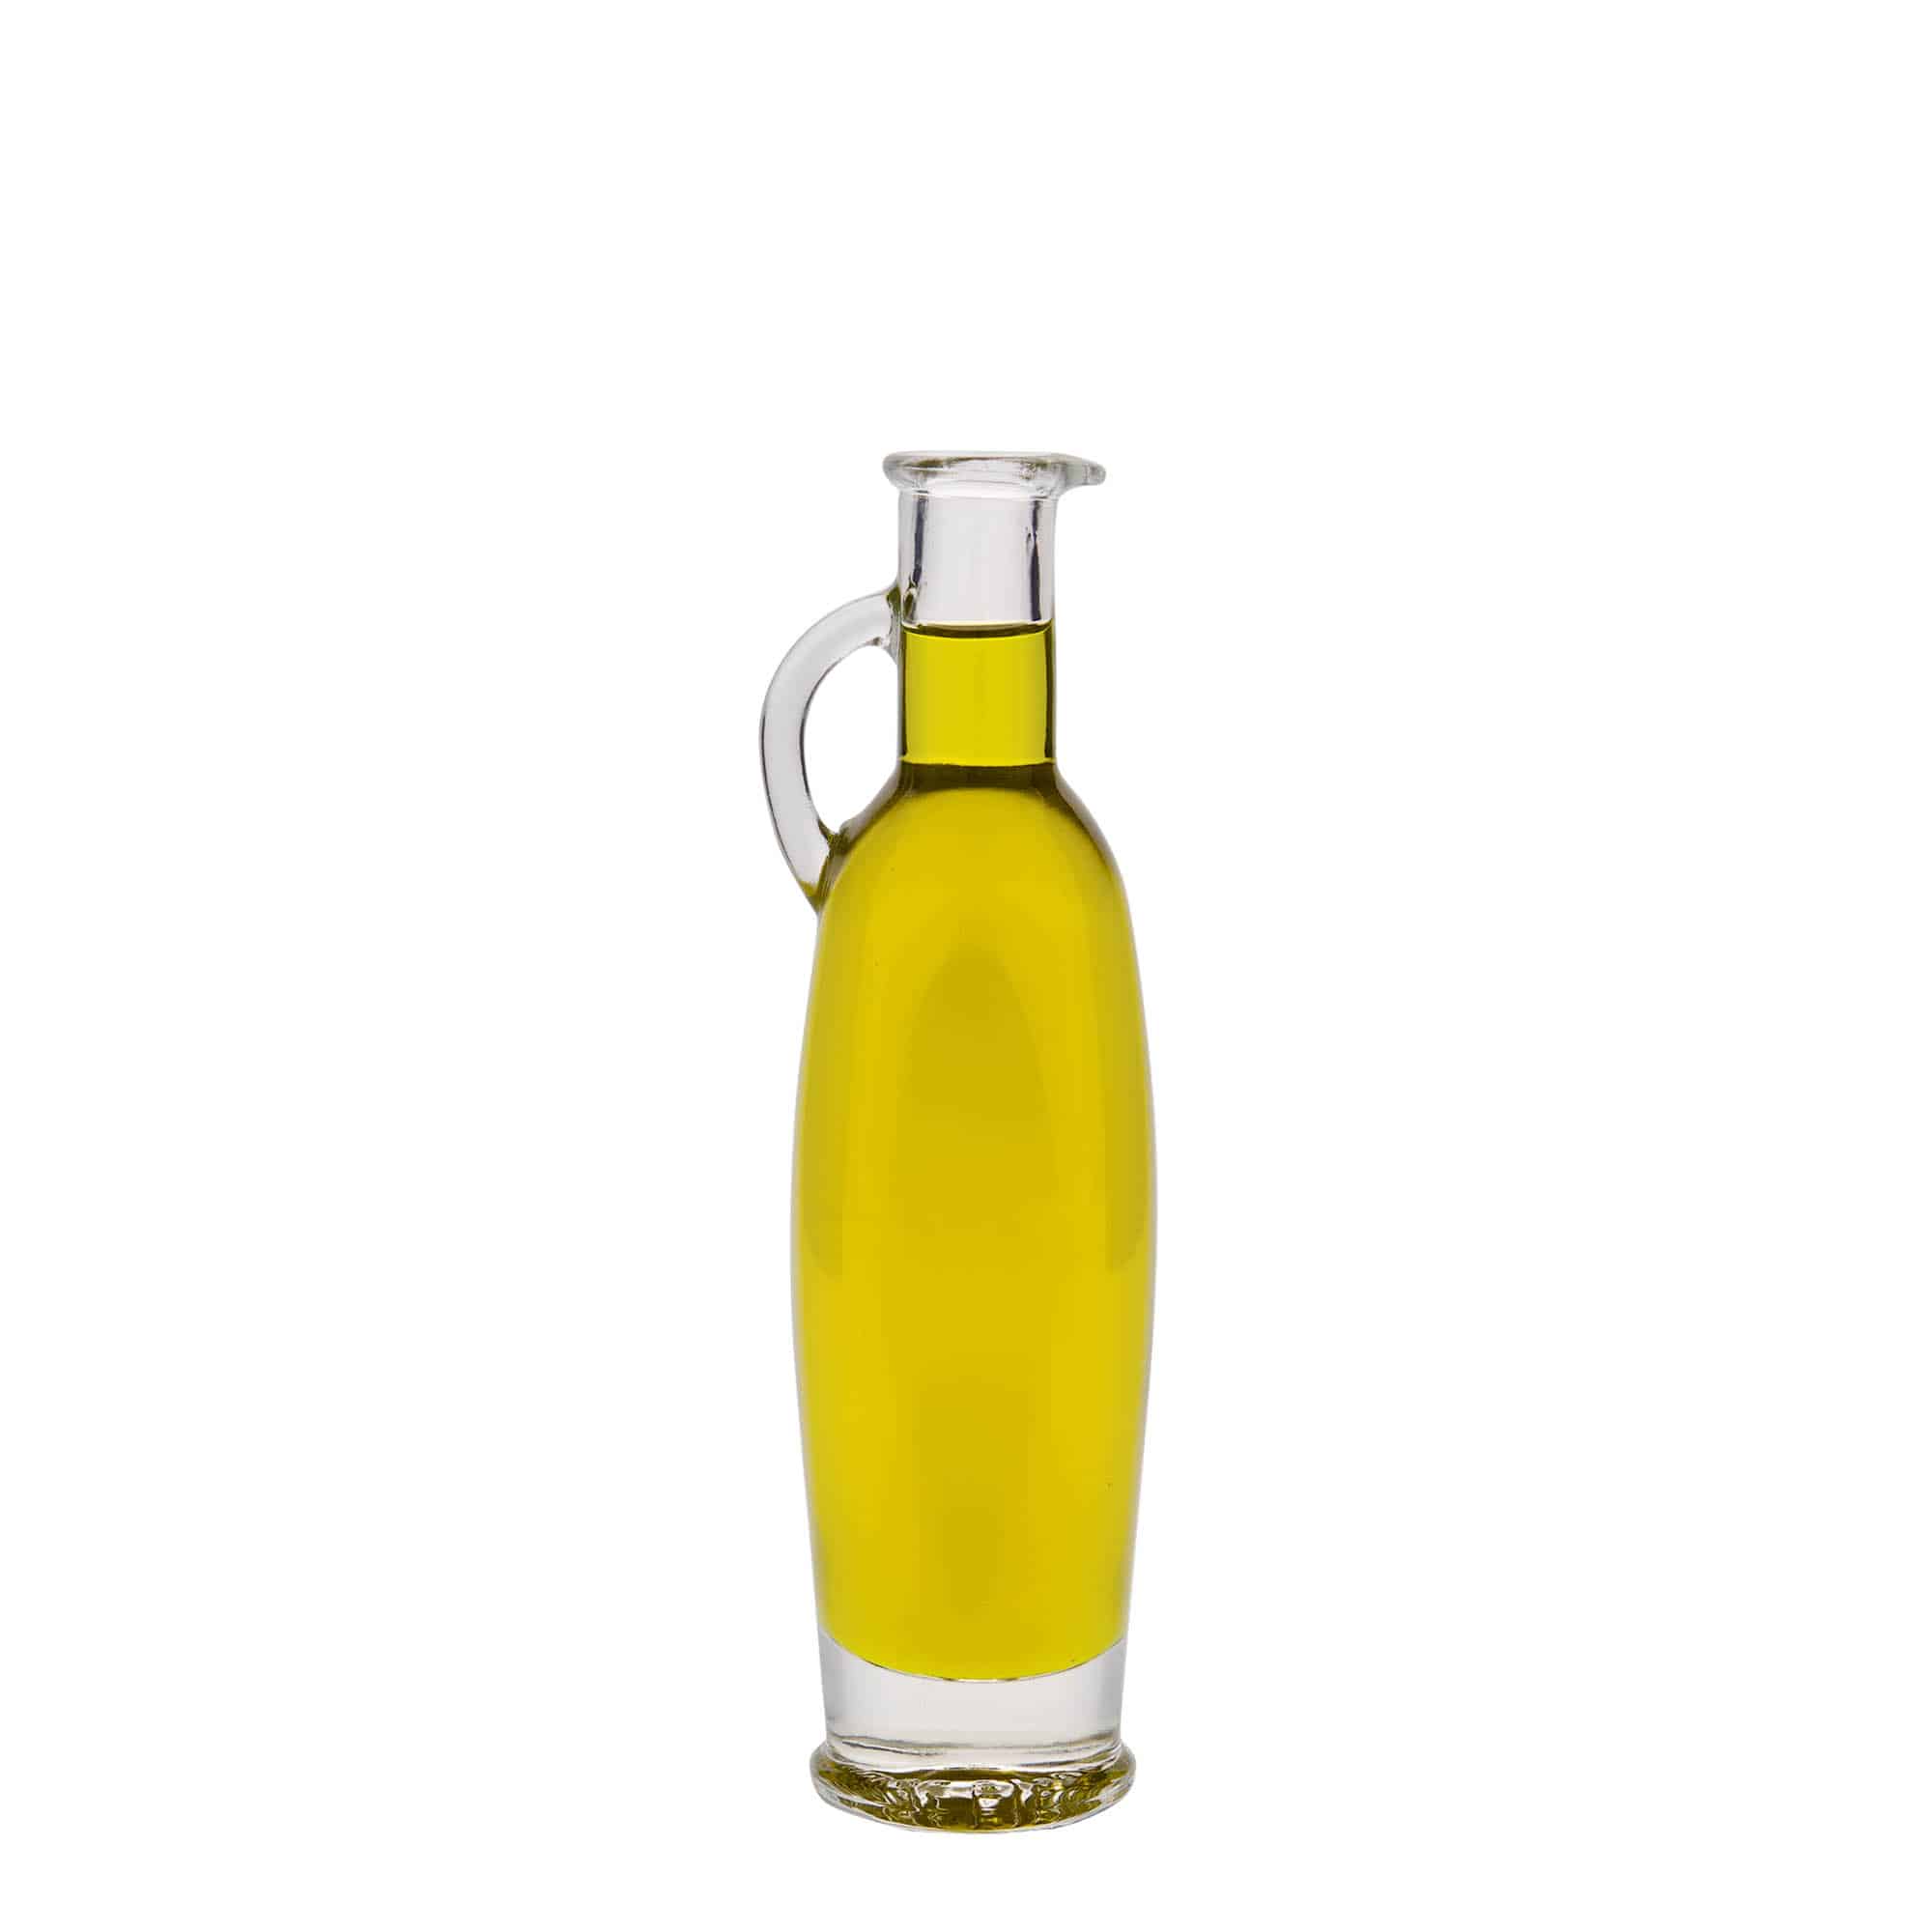 100 ml glass bottle 'Eleganta', oval, closure: cork